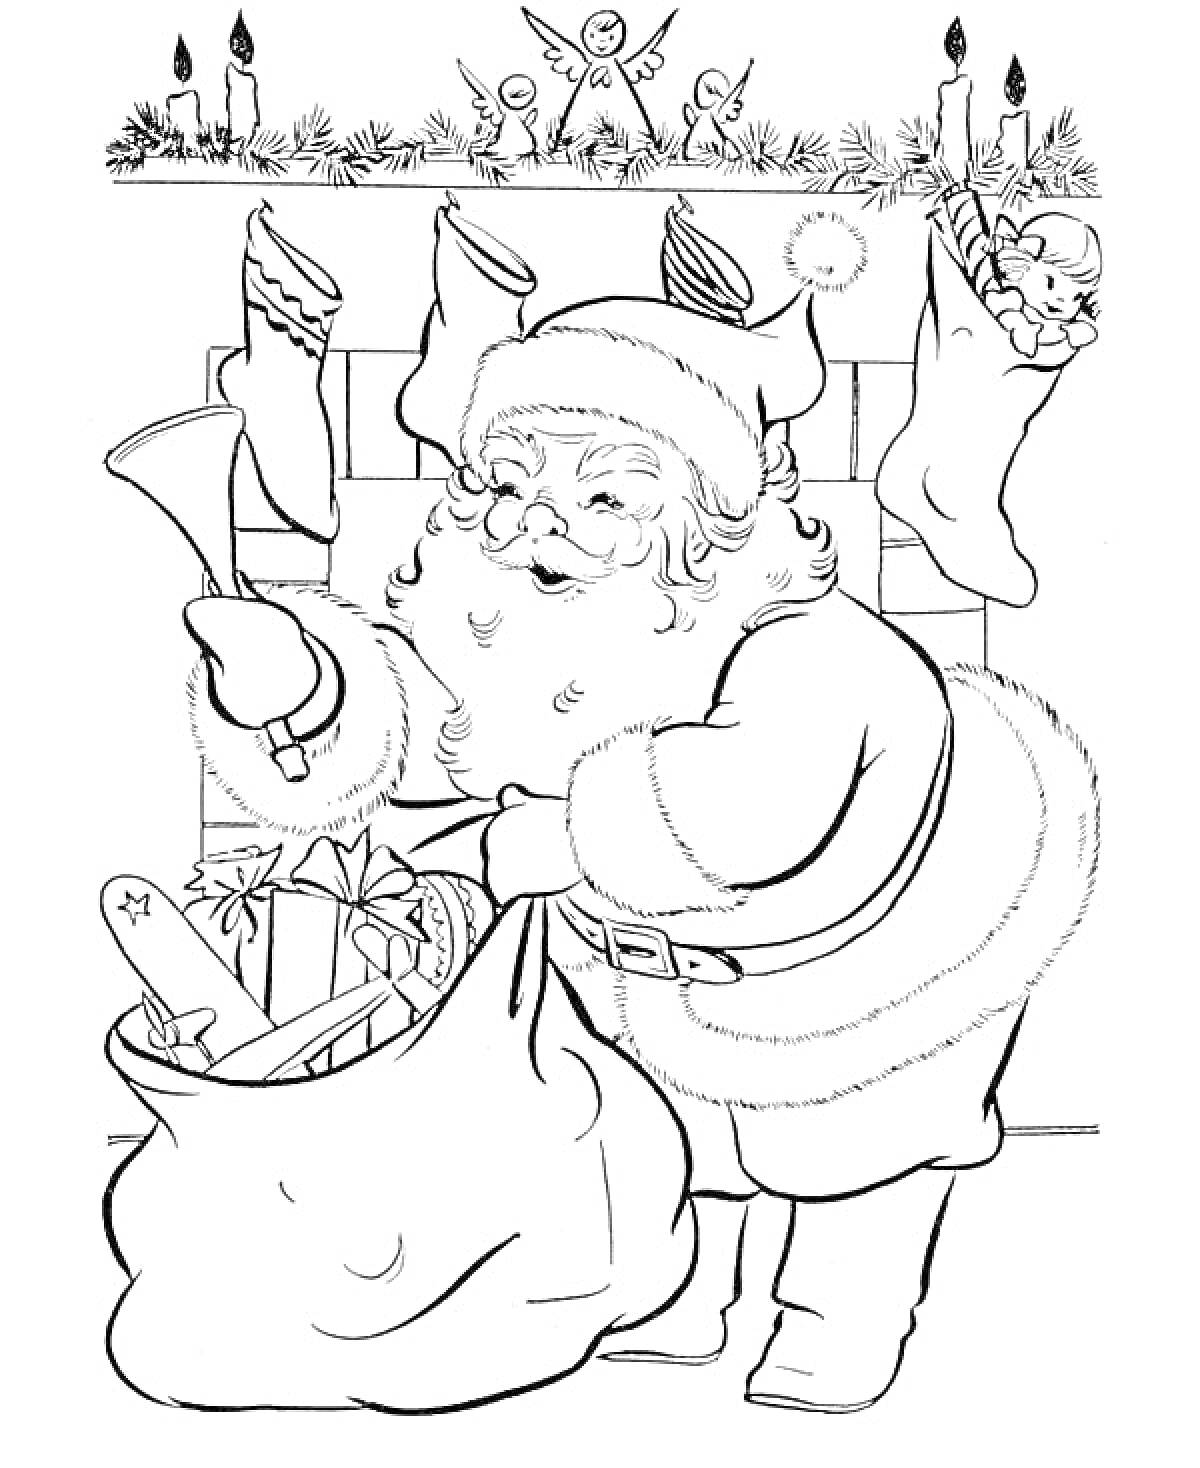 Санта Клаус у камина с мешком подарков, носки с подарками и свечи на каминной полке